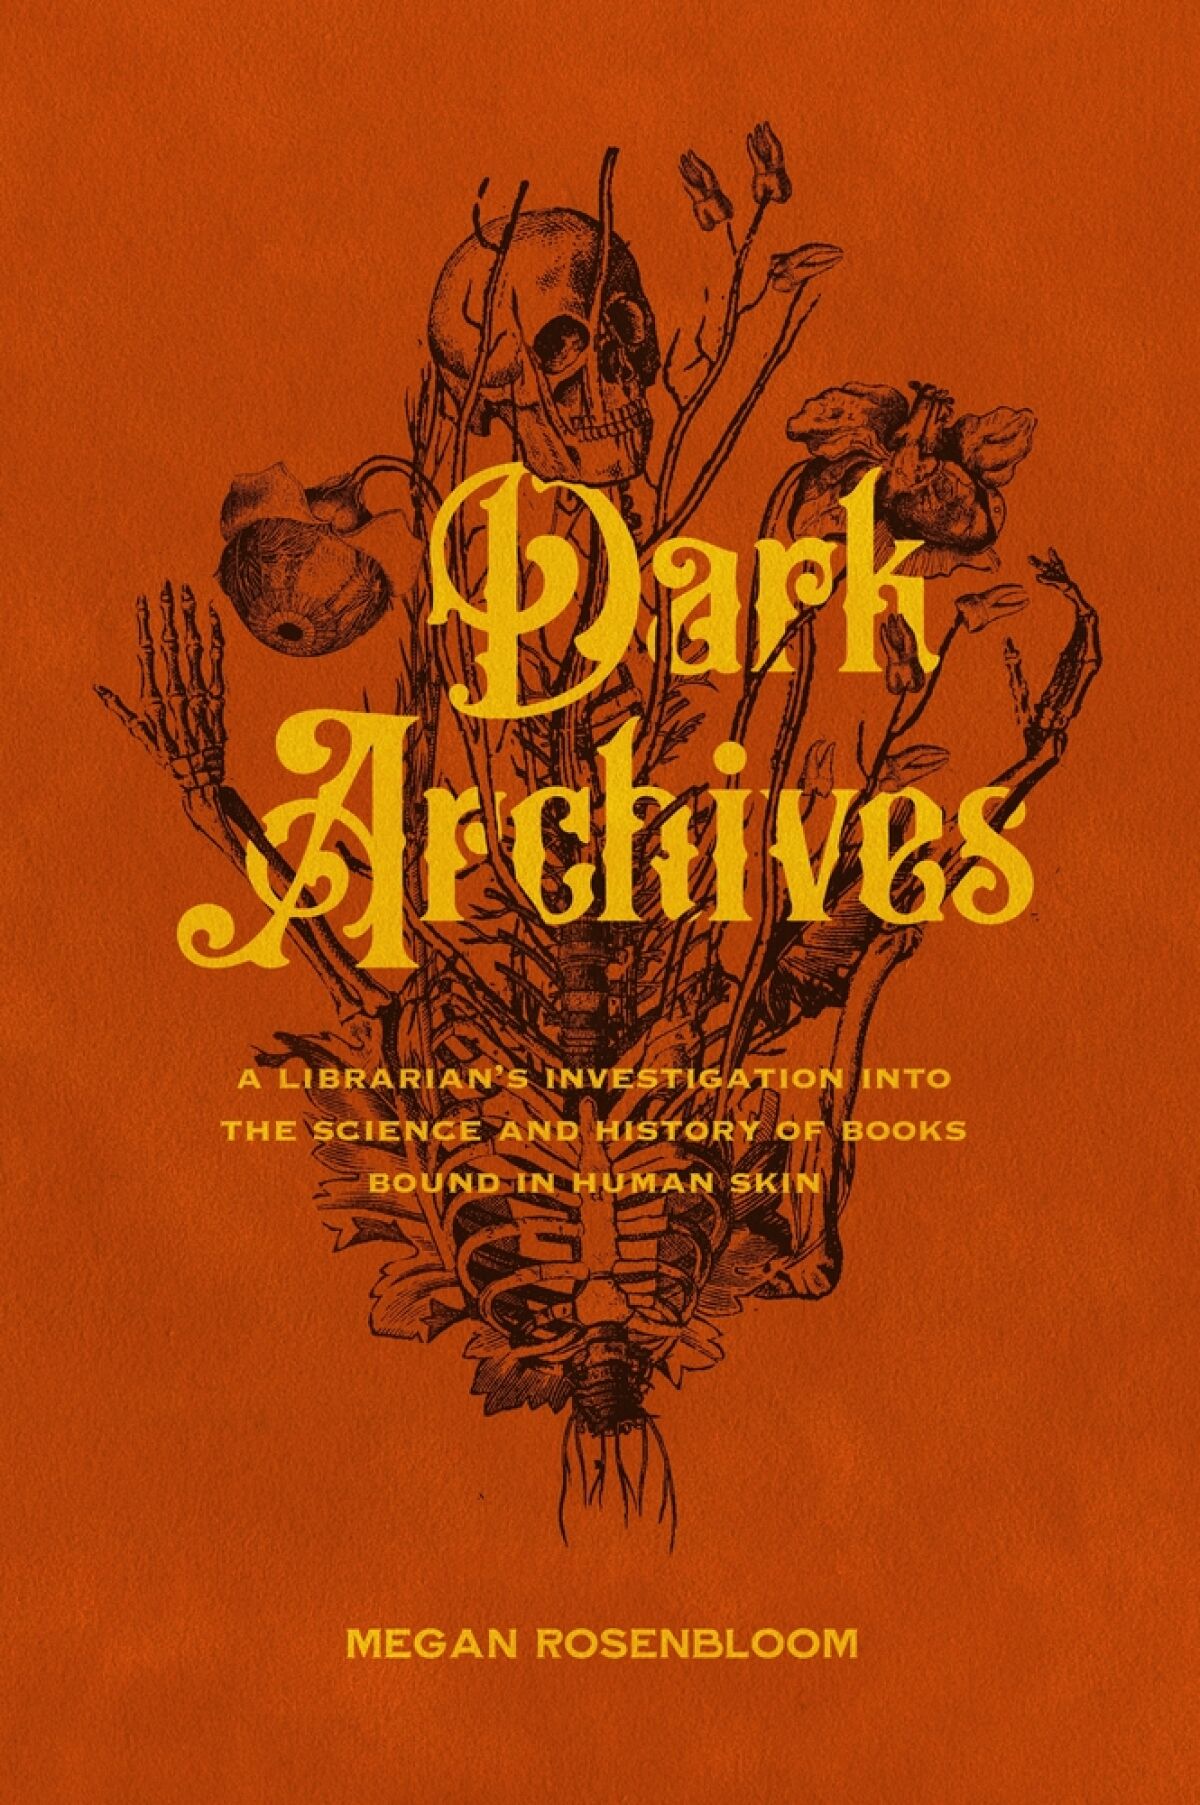 Book jacket for "Dark Archives" by Megan Rosenbloom.